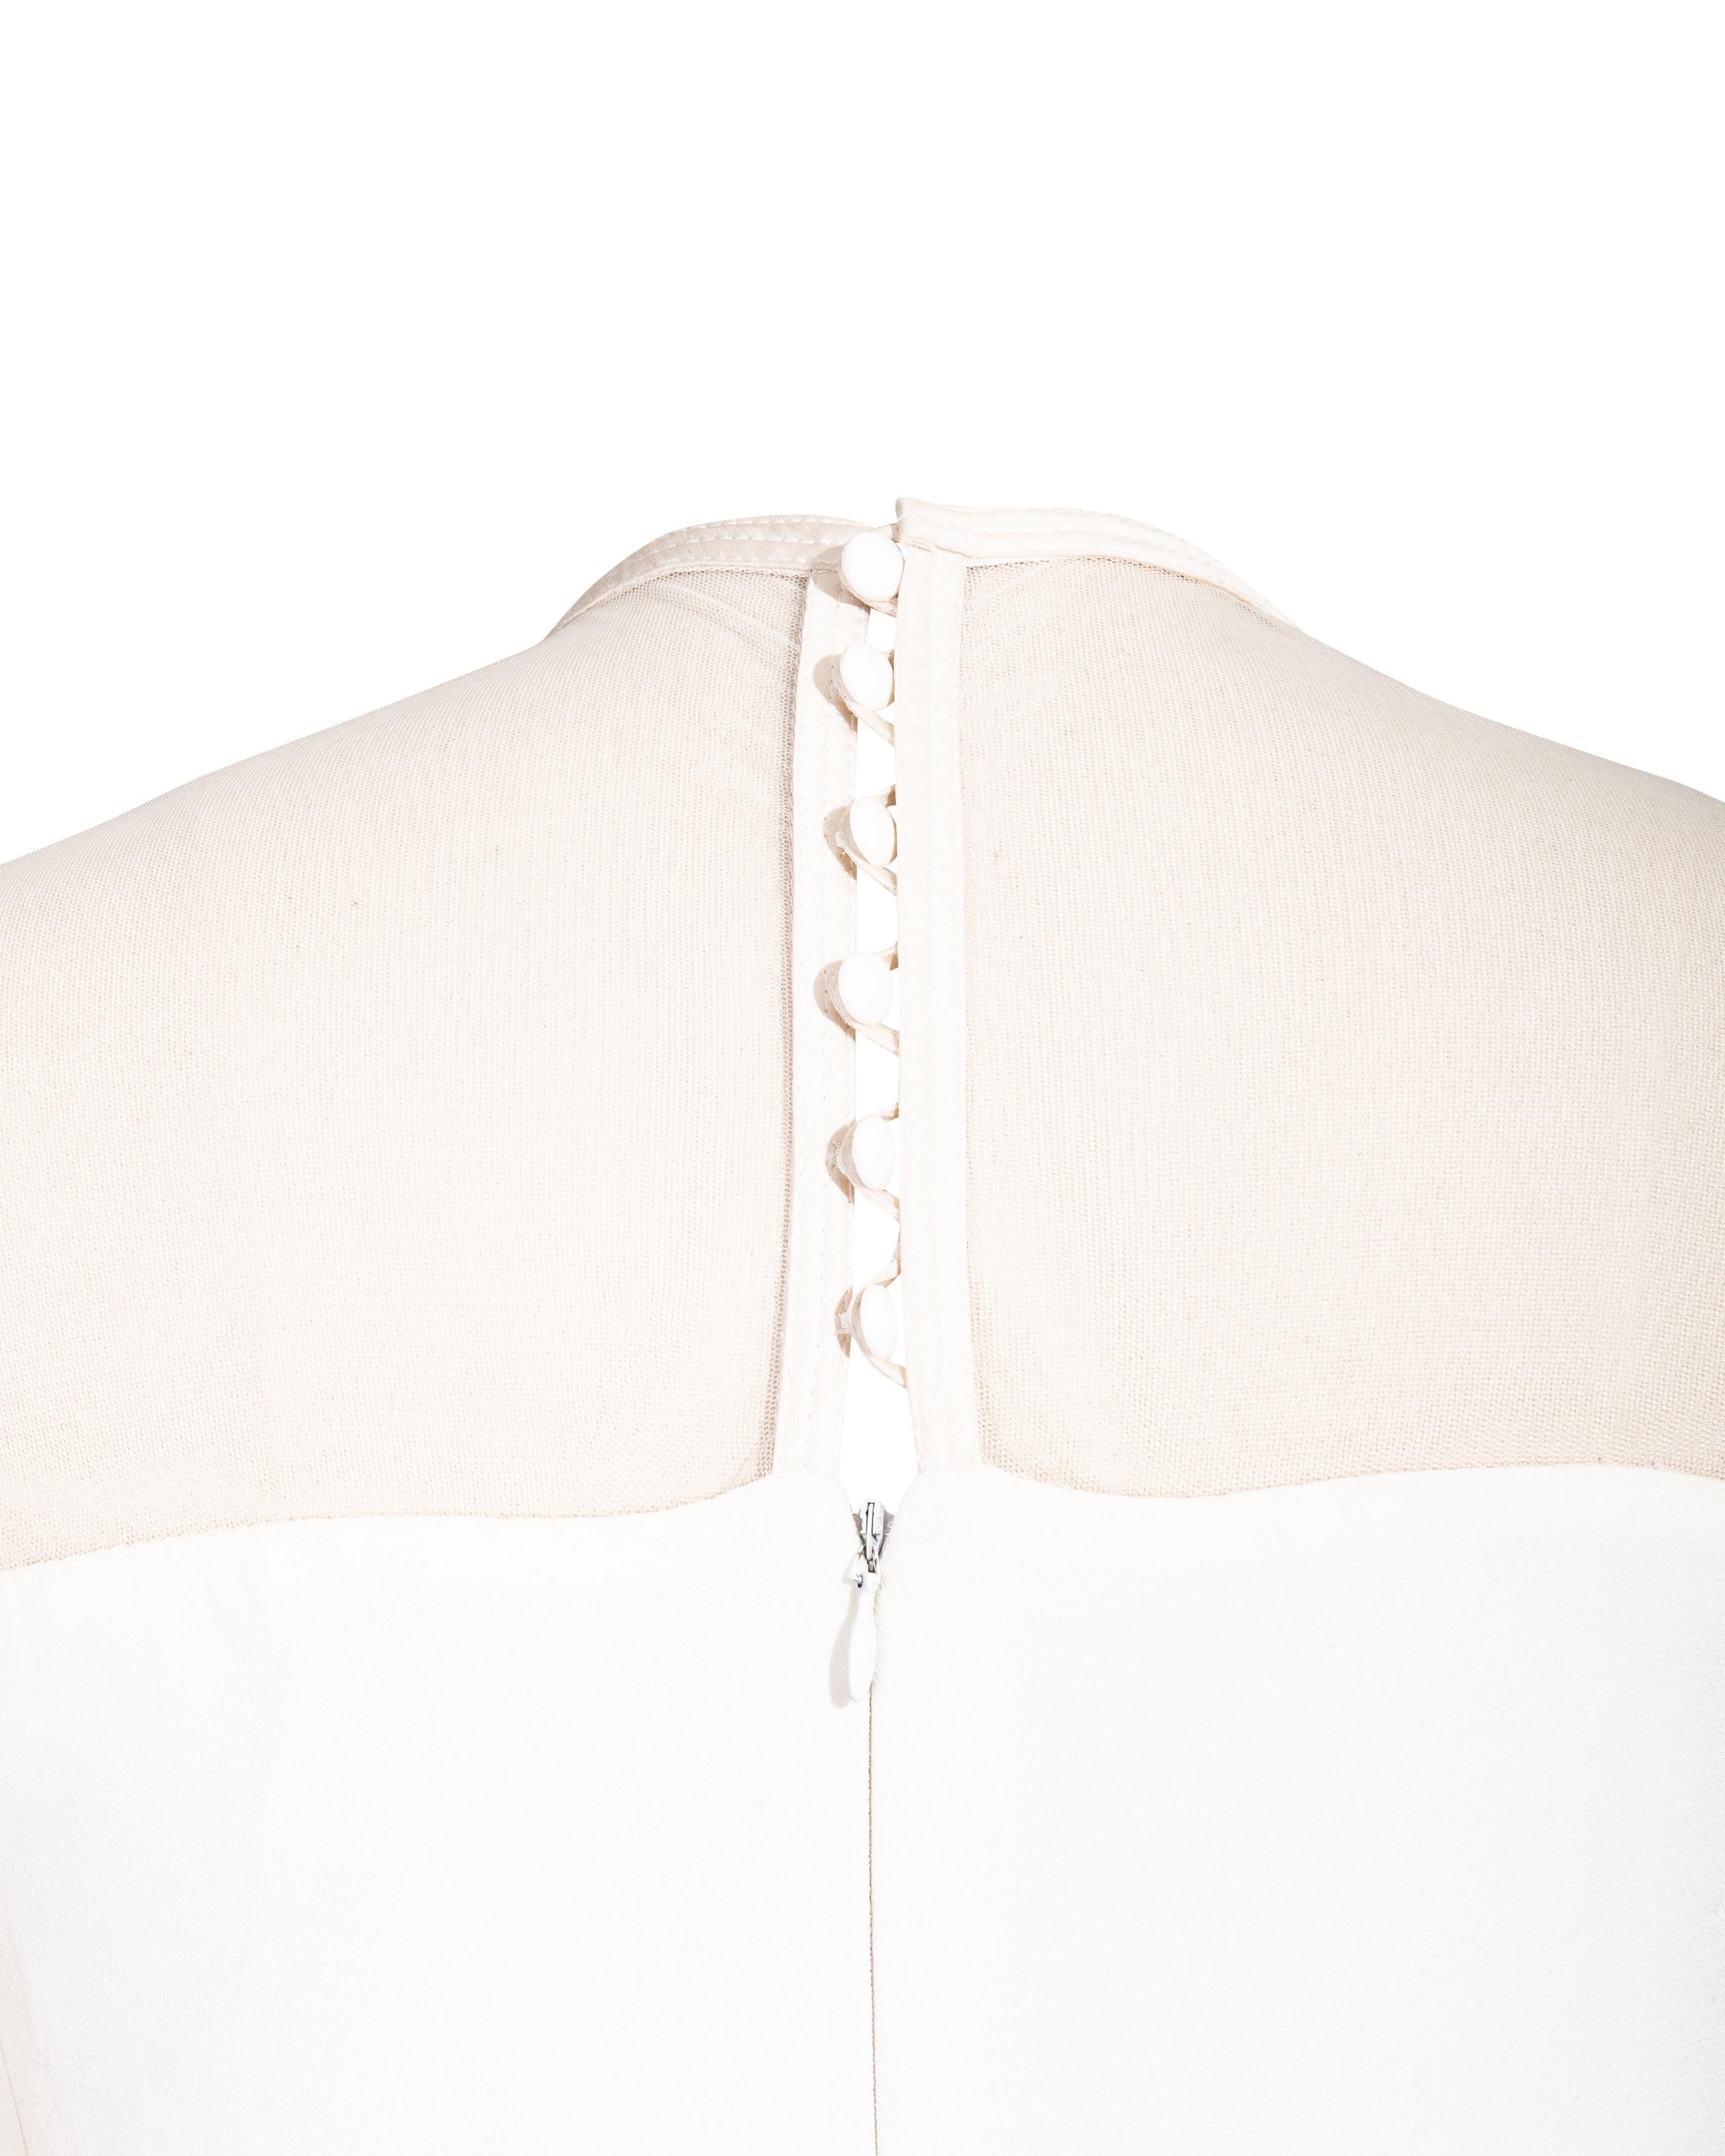 S/S 1996 Gianni Versace Mini-robe en maille blanche 2